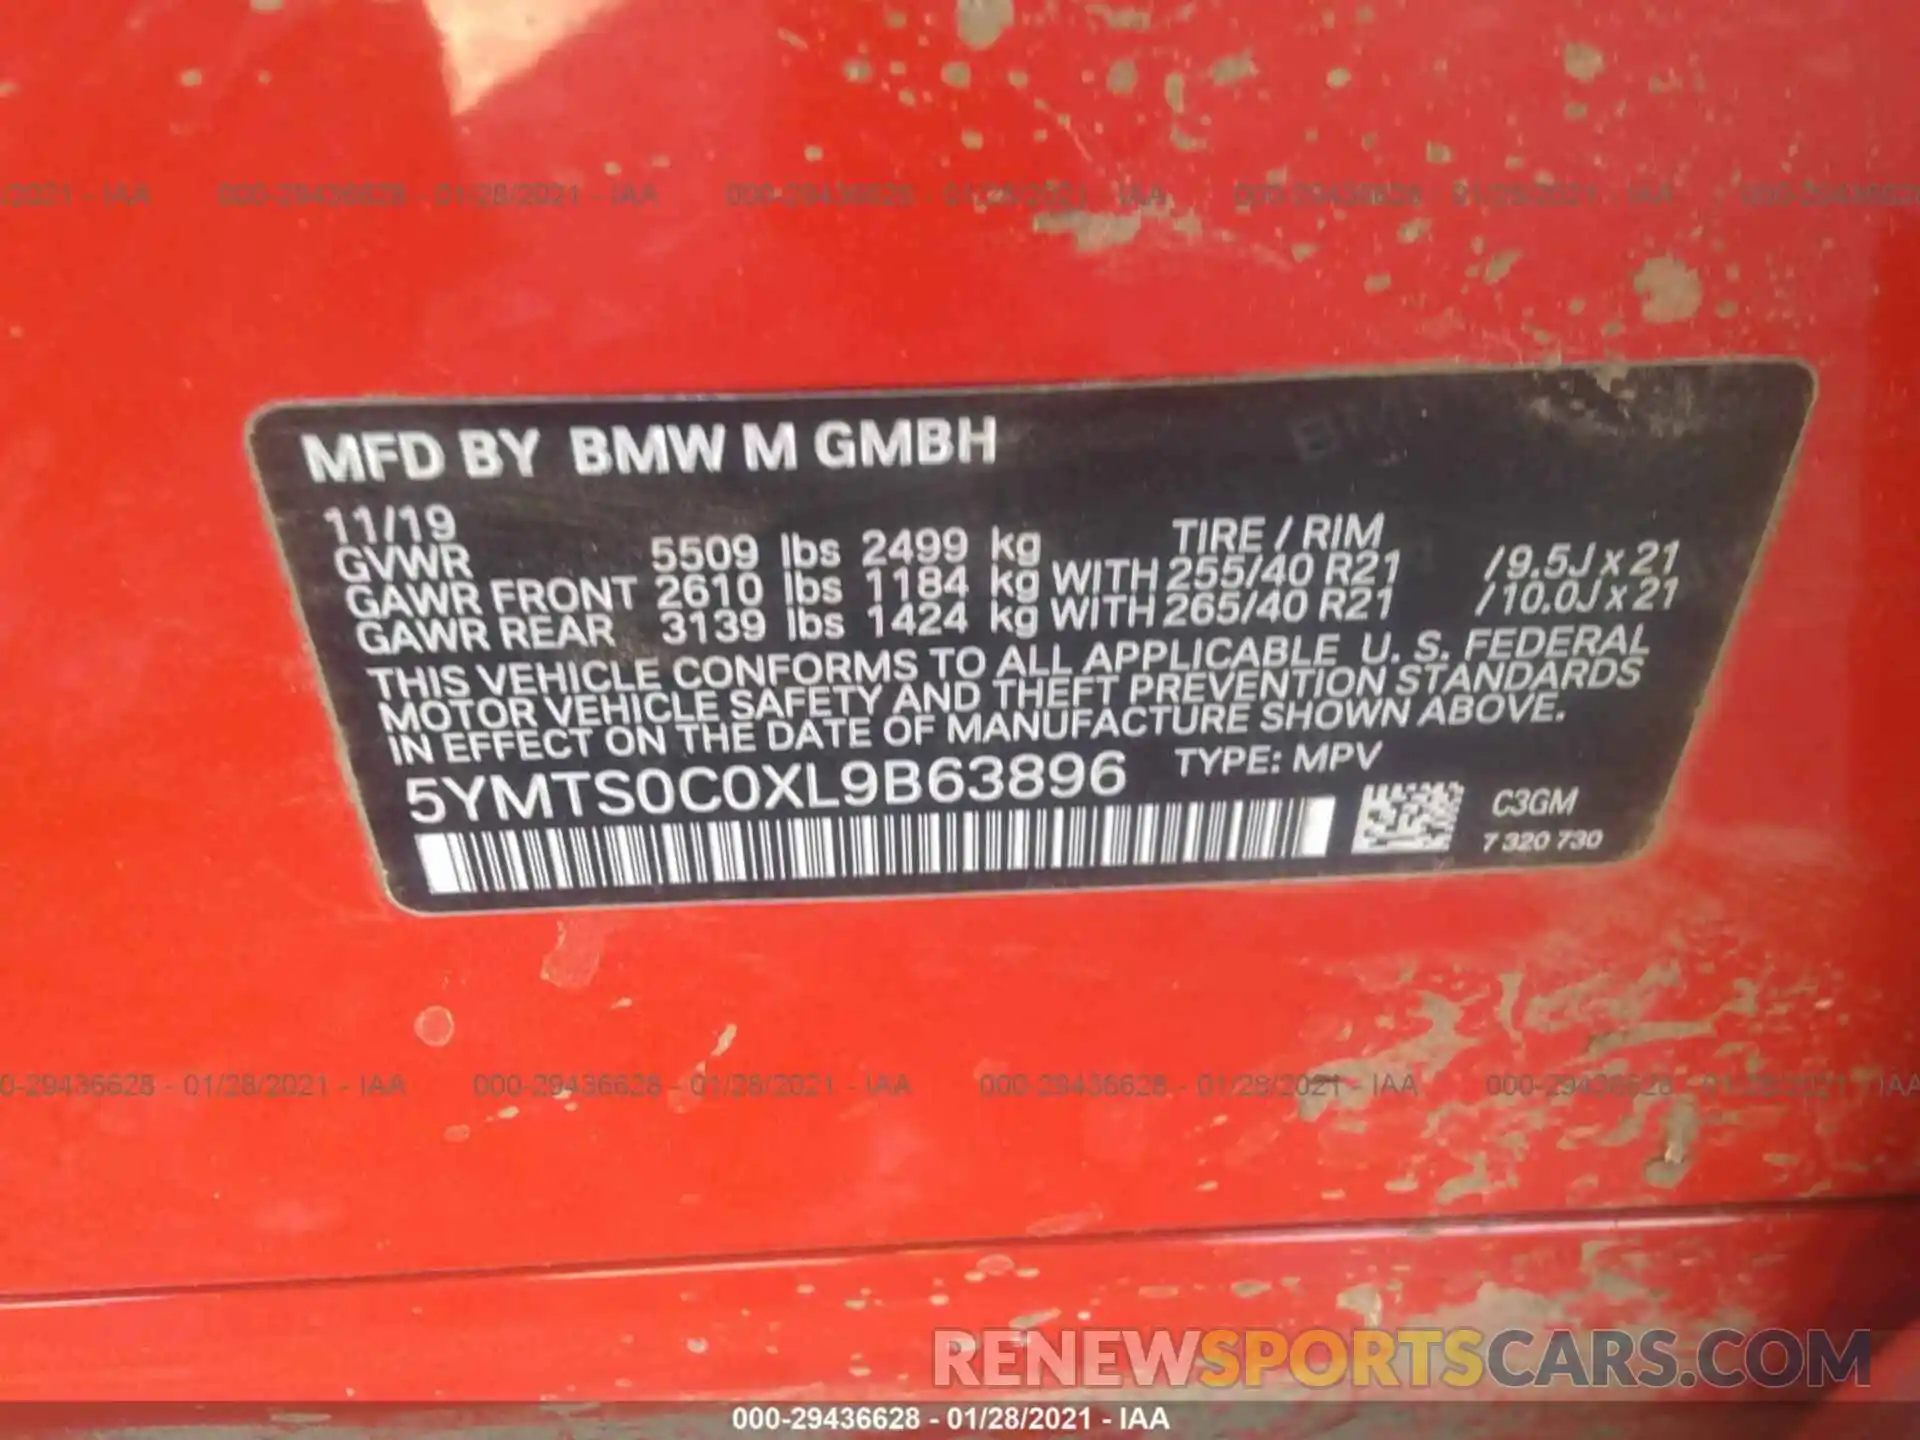 9 Фотография поврежденного автомобиля 5YMTS0C0XL9B63896 BMW X3 M 2020